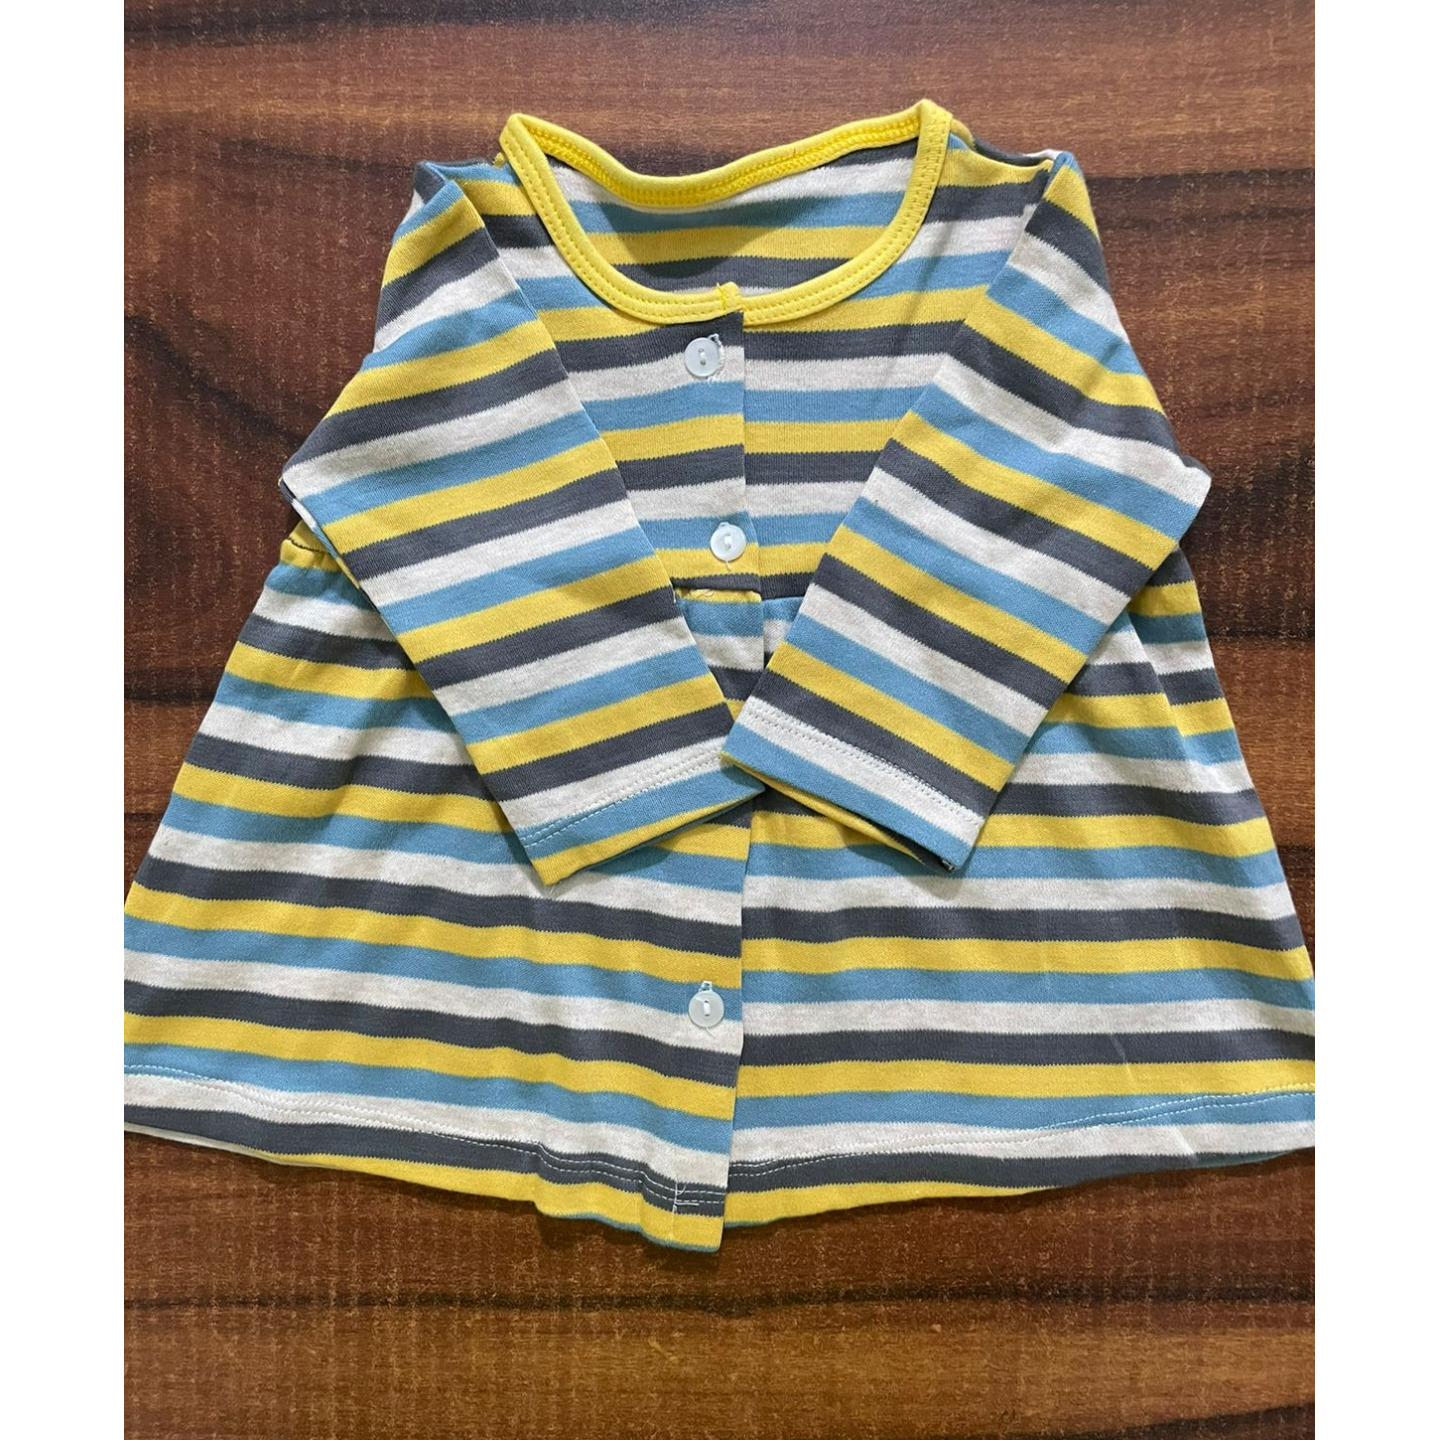 Precious One NewBorn Infant Kids BabyGirl Frock 12-18 Months Yellow Stripes